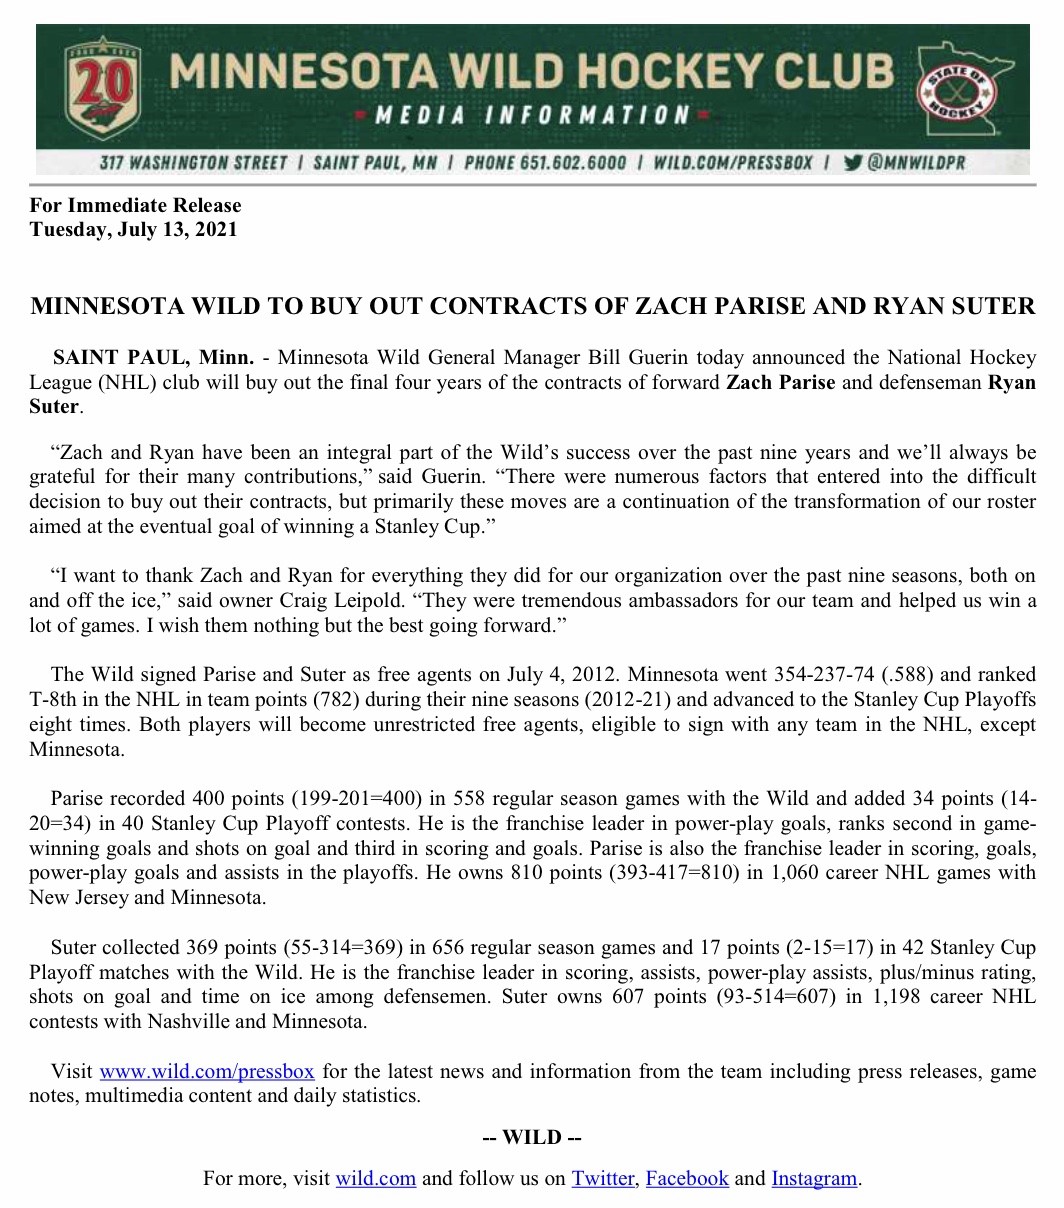 Minnesota Wild To Buy Out Zach Parise, Ryan Suter